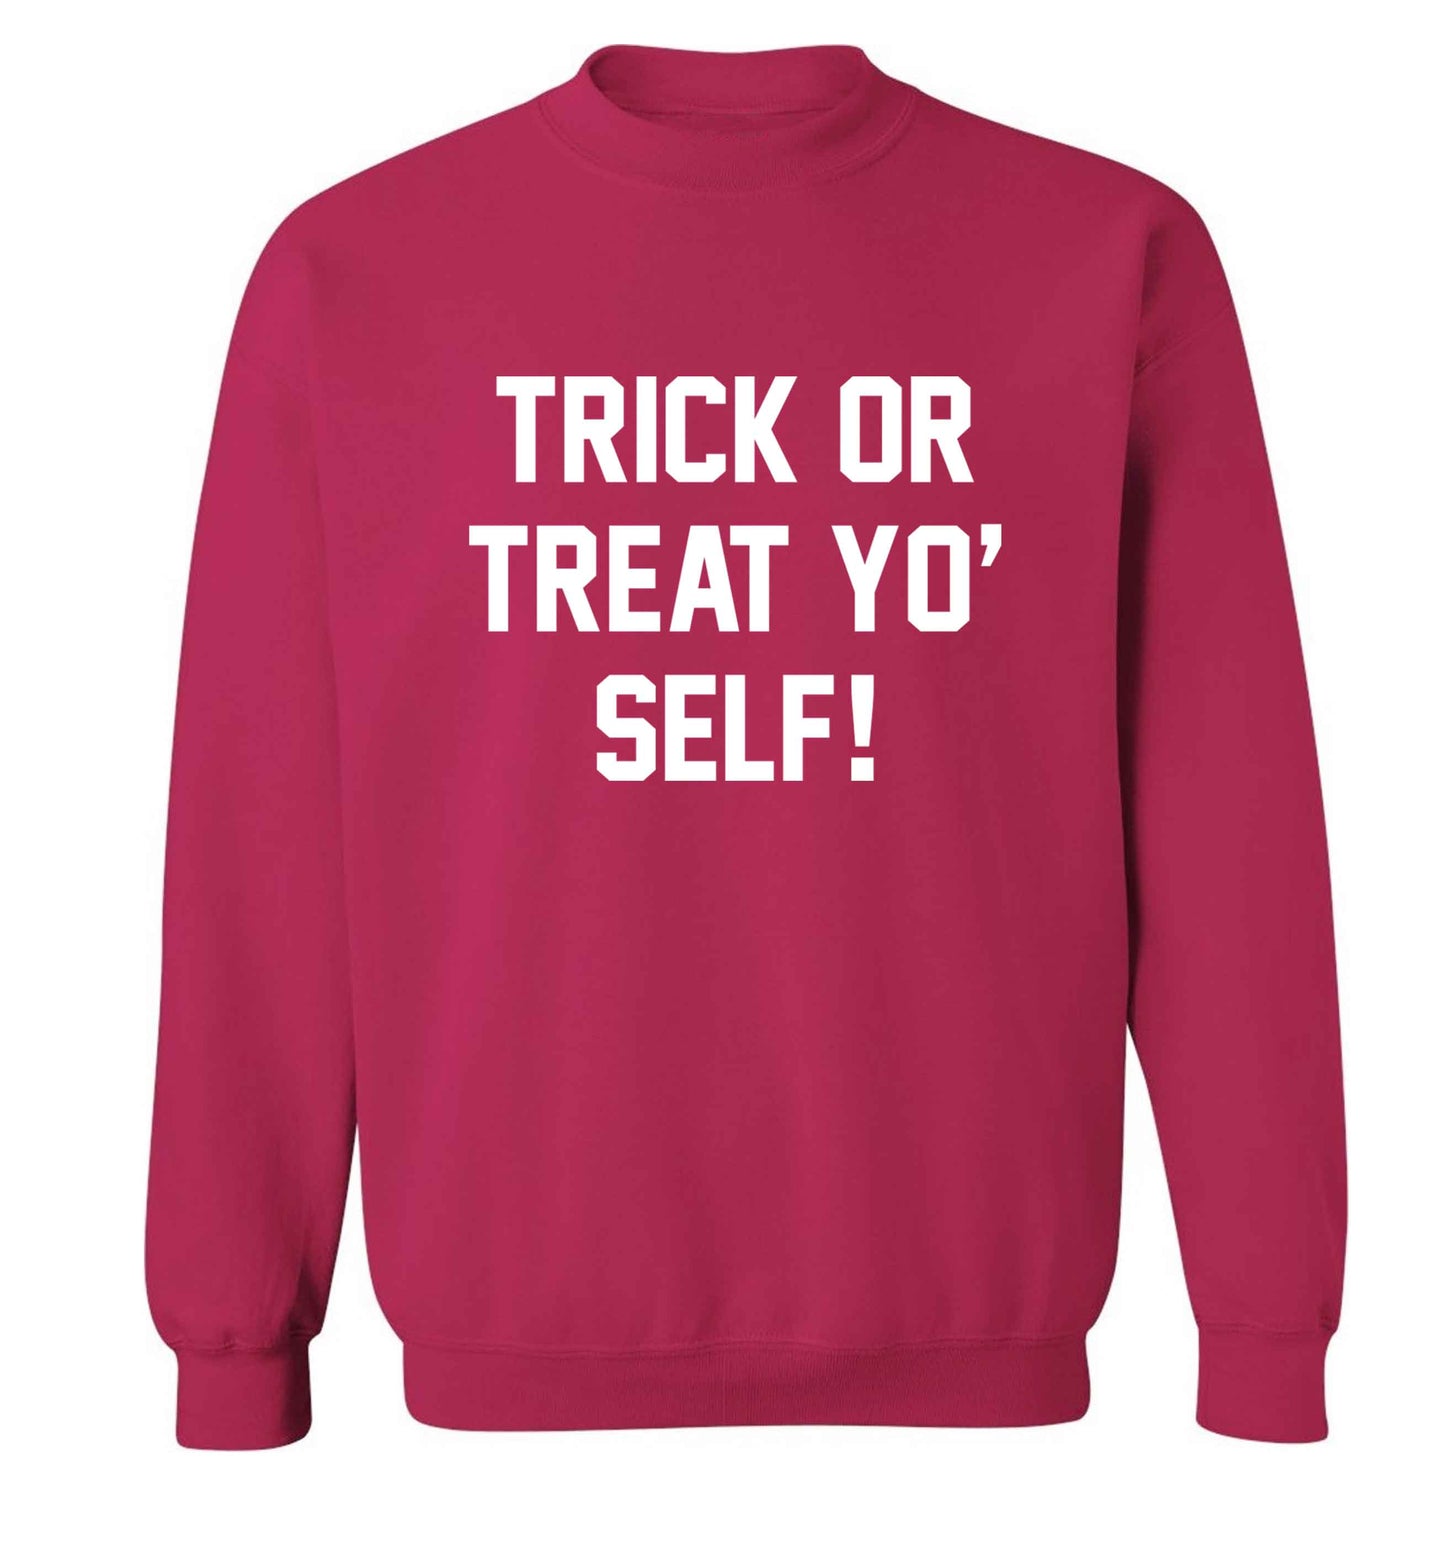 Trick or Treat Yo' Self adult's unisex pink sweater 2XL